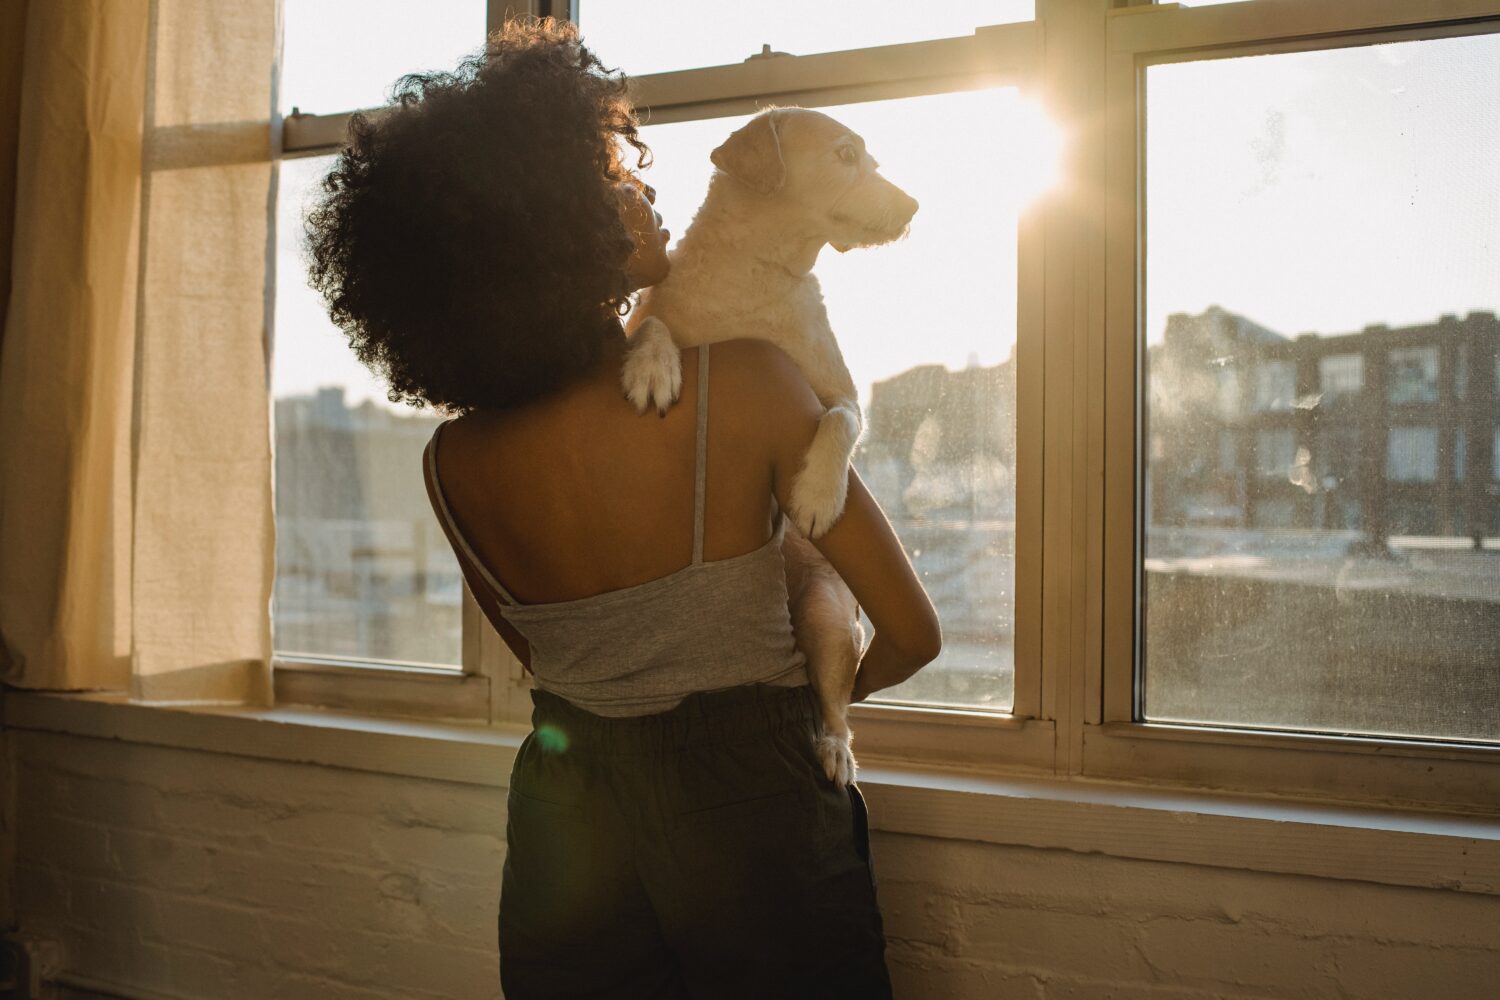 Photo by Samson Katt from Pexels: https://www.pexels.com/photo/black-woman-holding-dog-near-window-5256719/